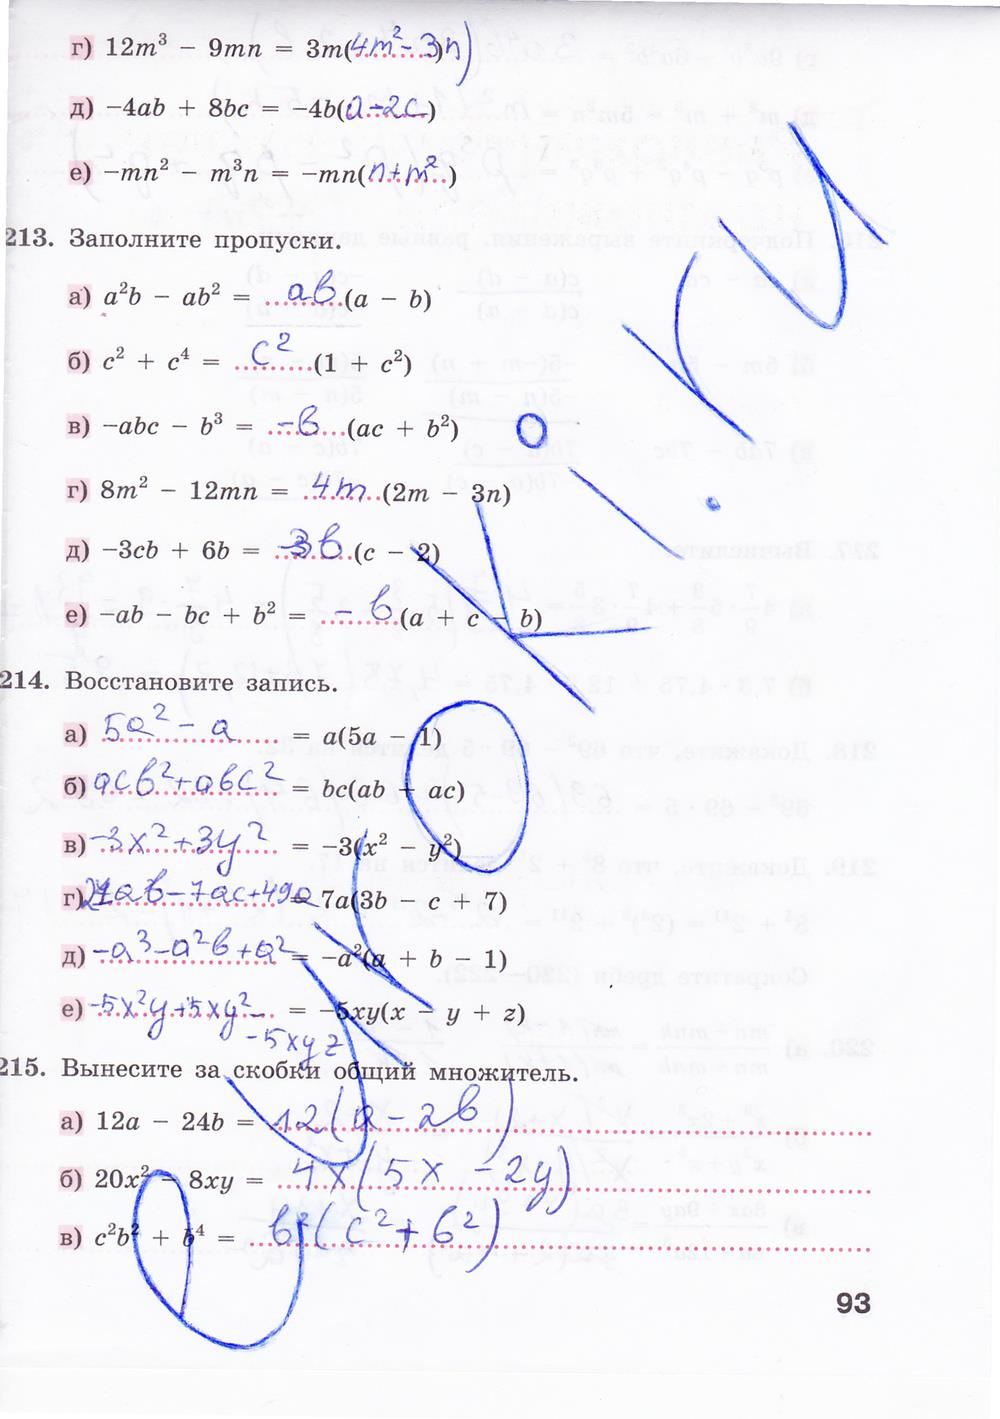 гдз 7 класс рабочая тетрадь страница 93 алгебра Минаева, Рослова